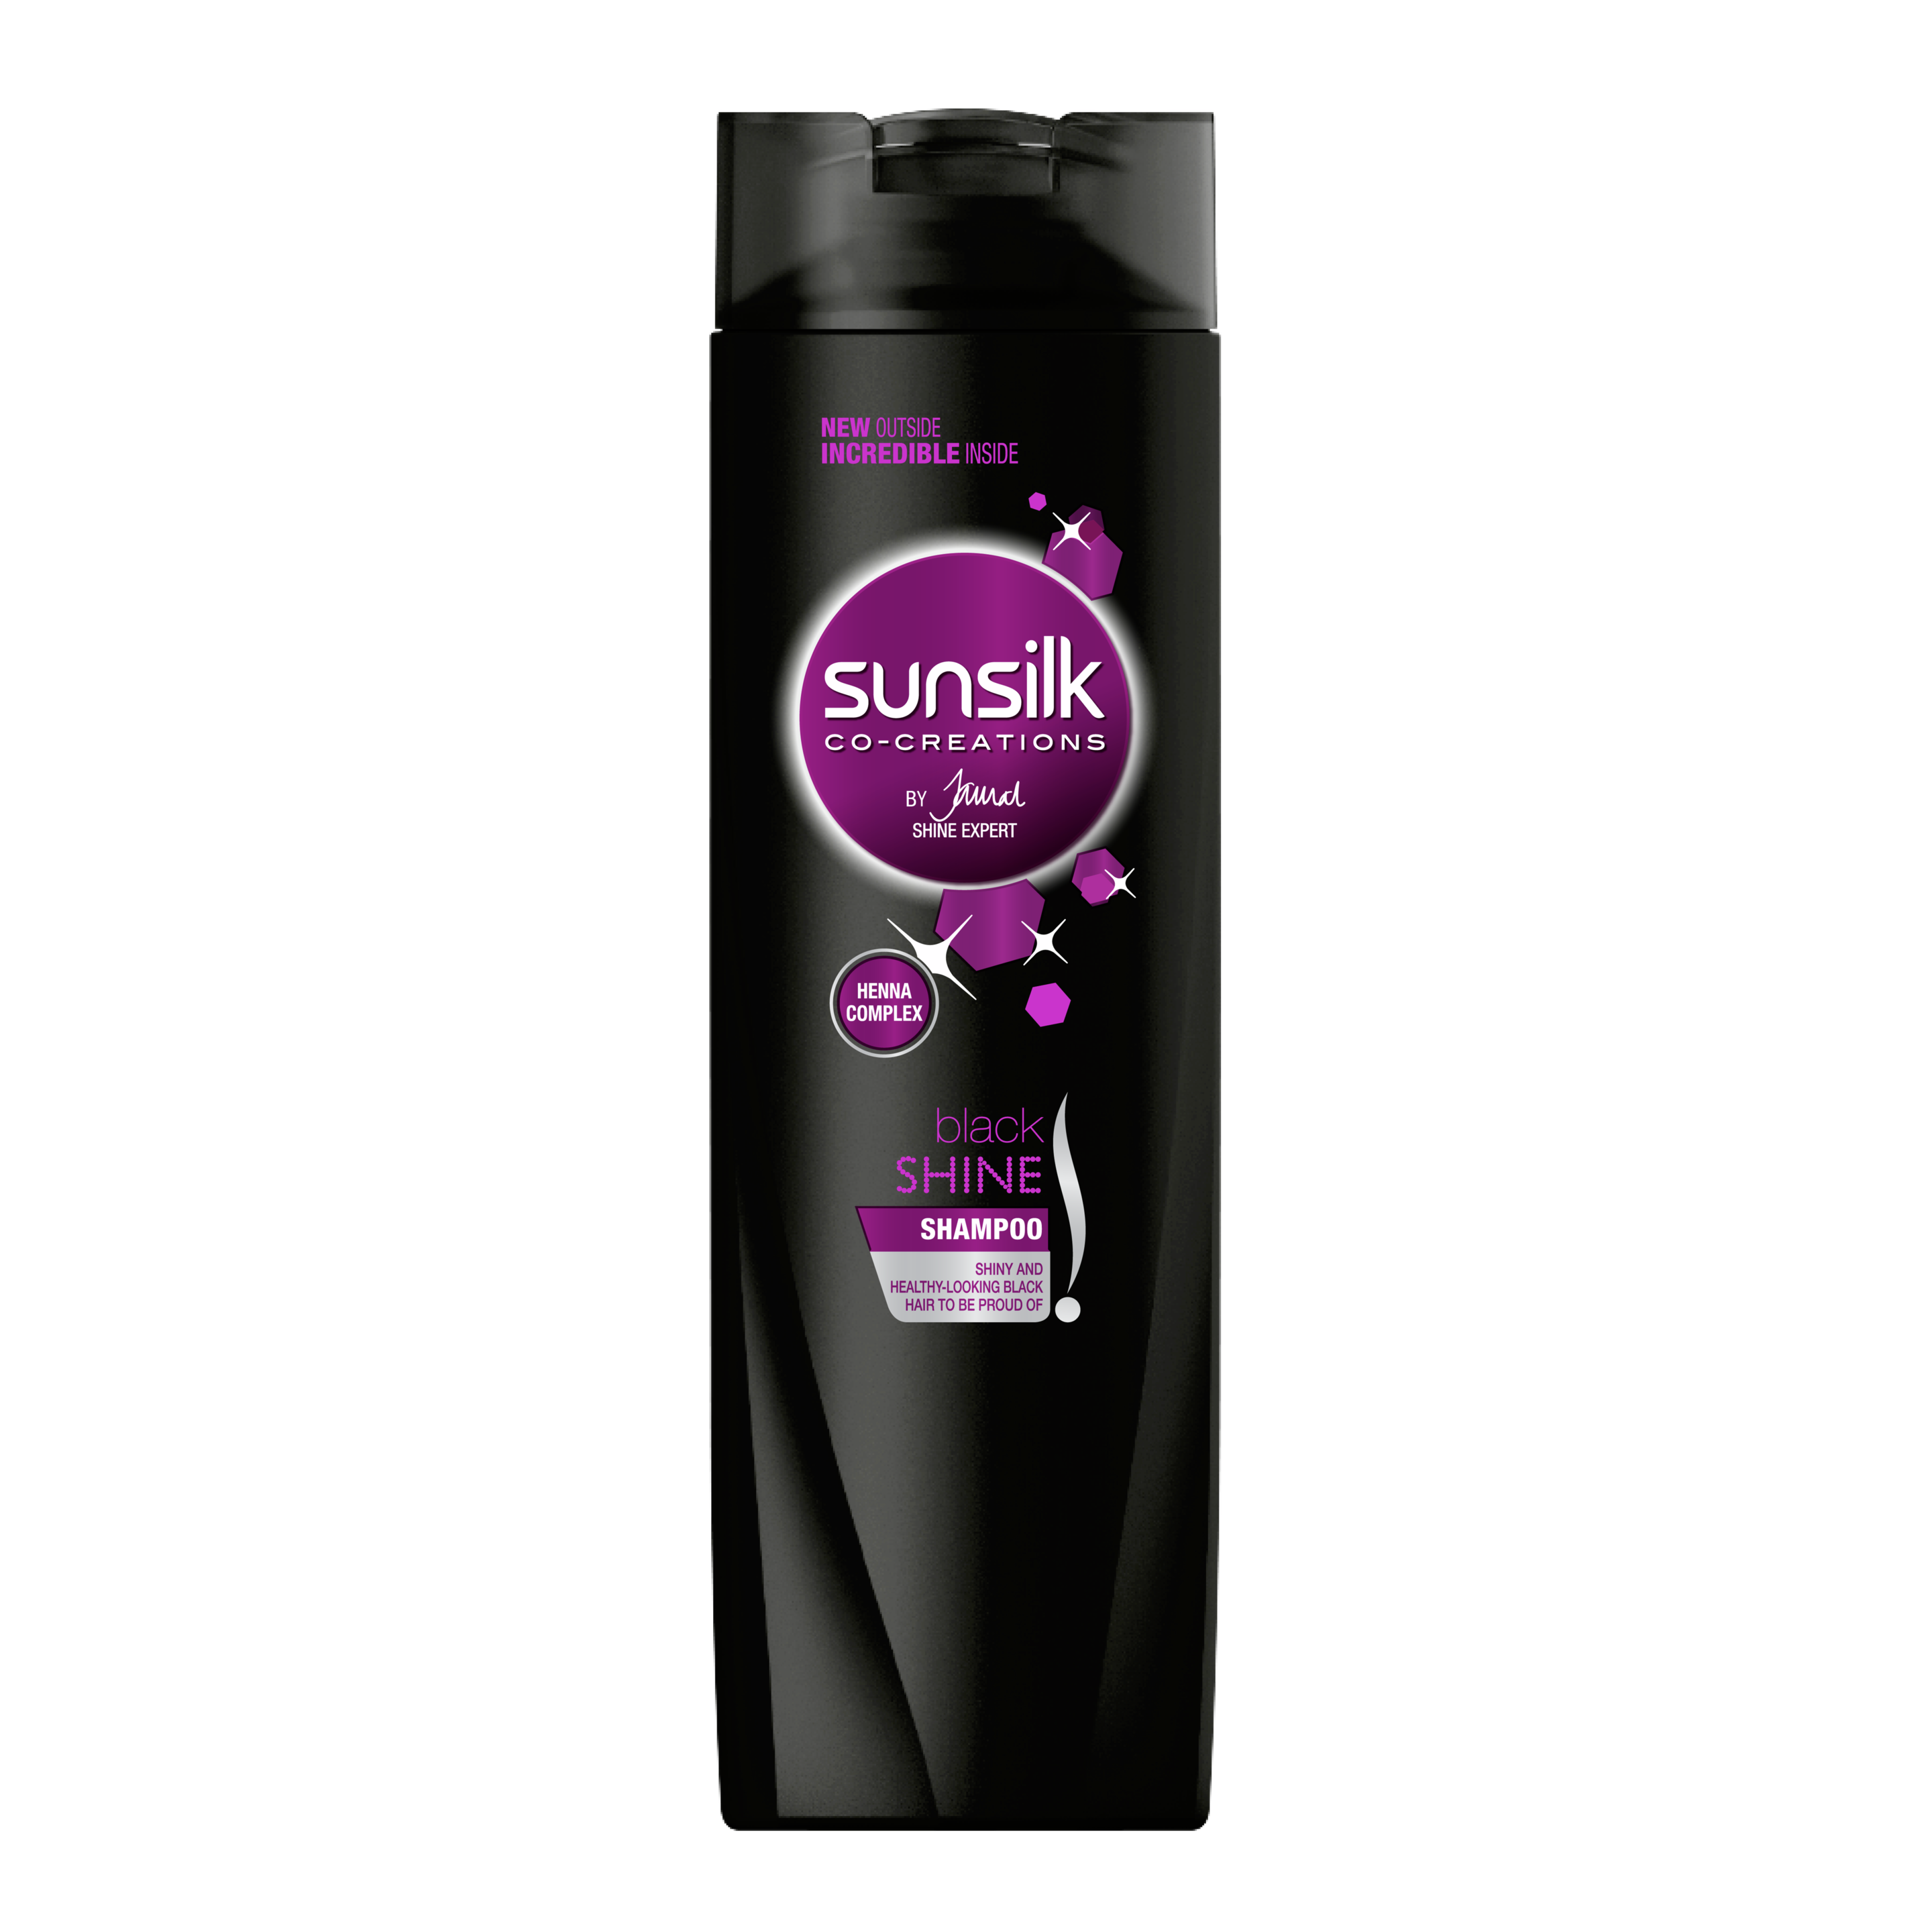 Sunsilk Black Shine Shampoo 160ml front of pack image